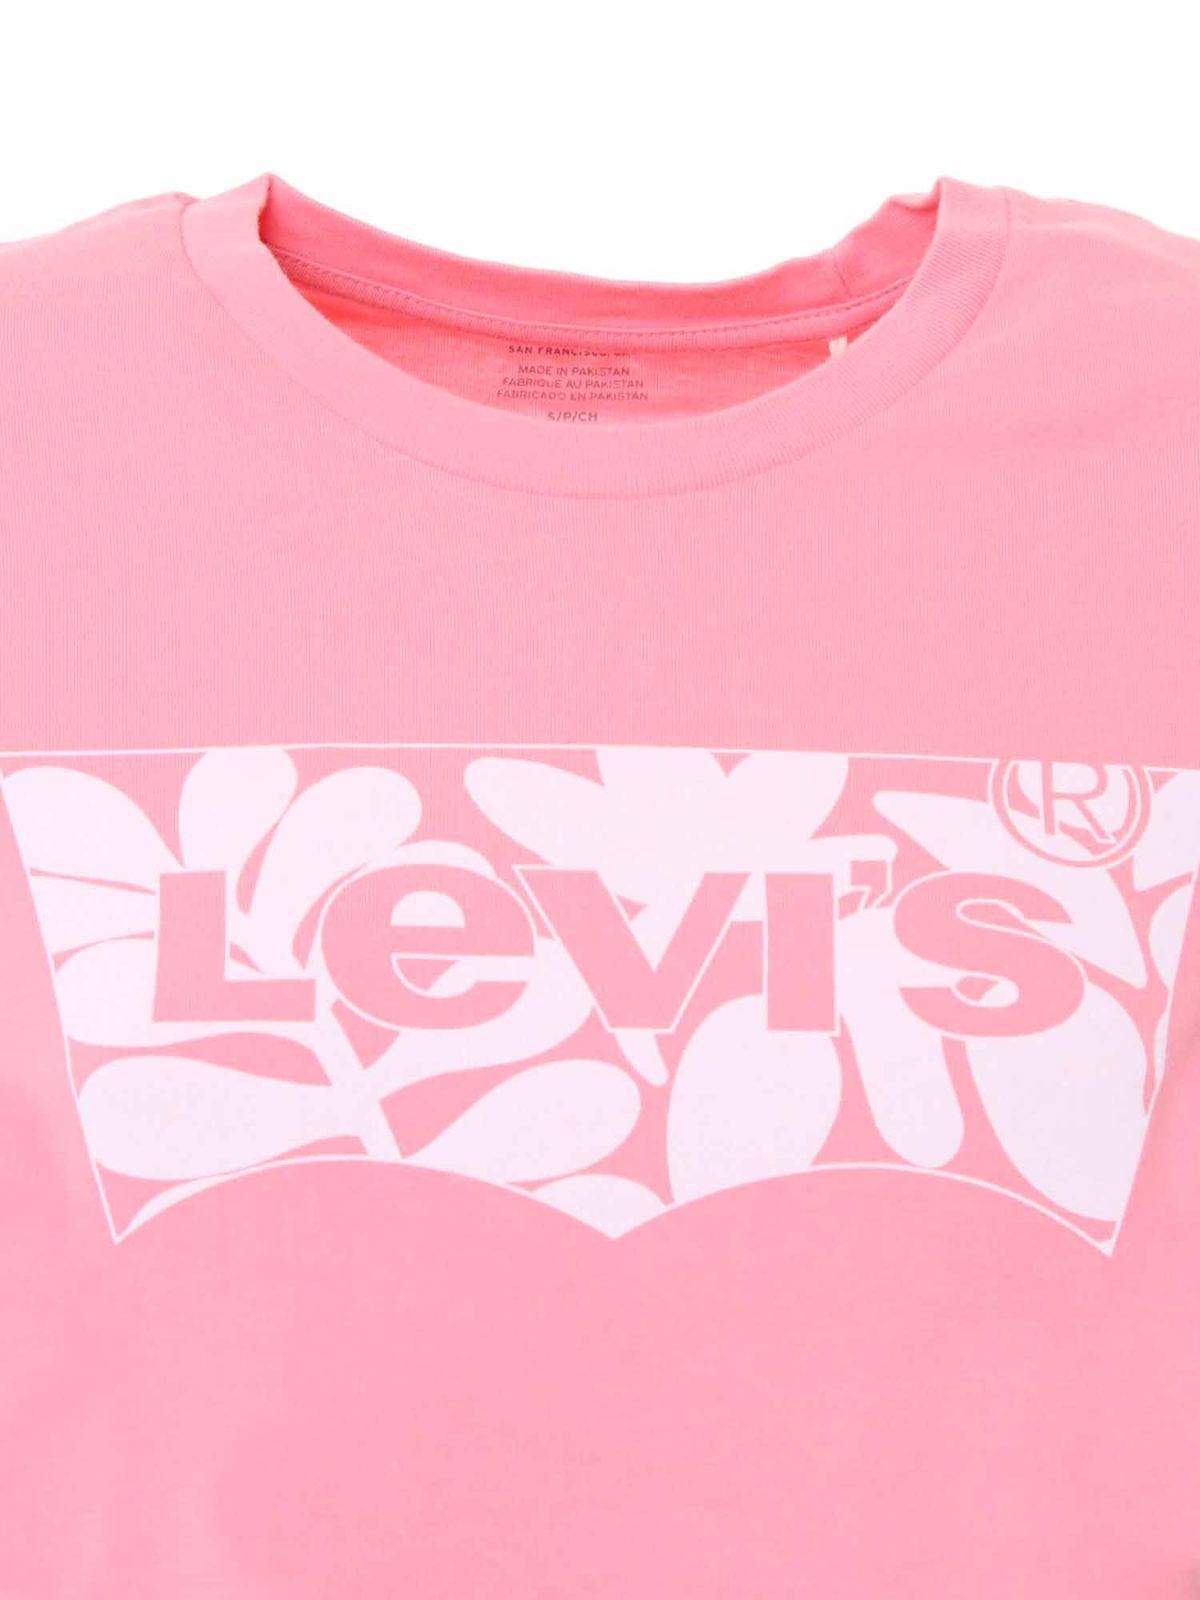 pink levi t shirt